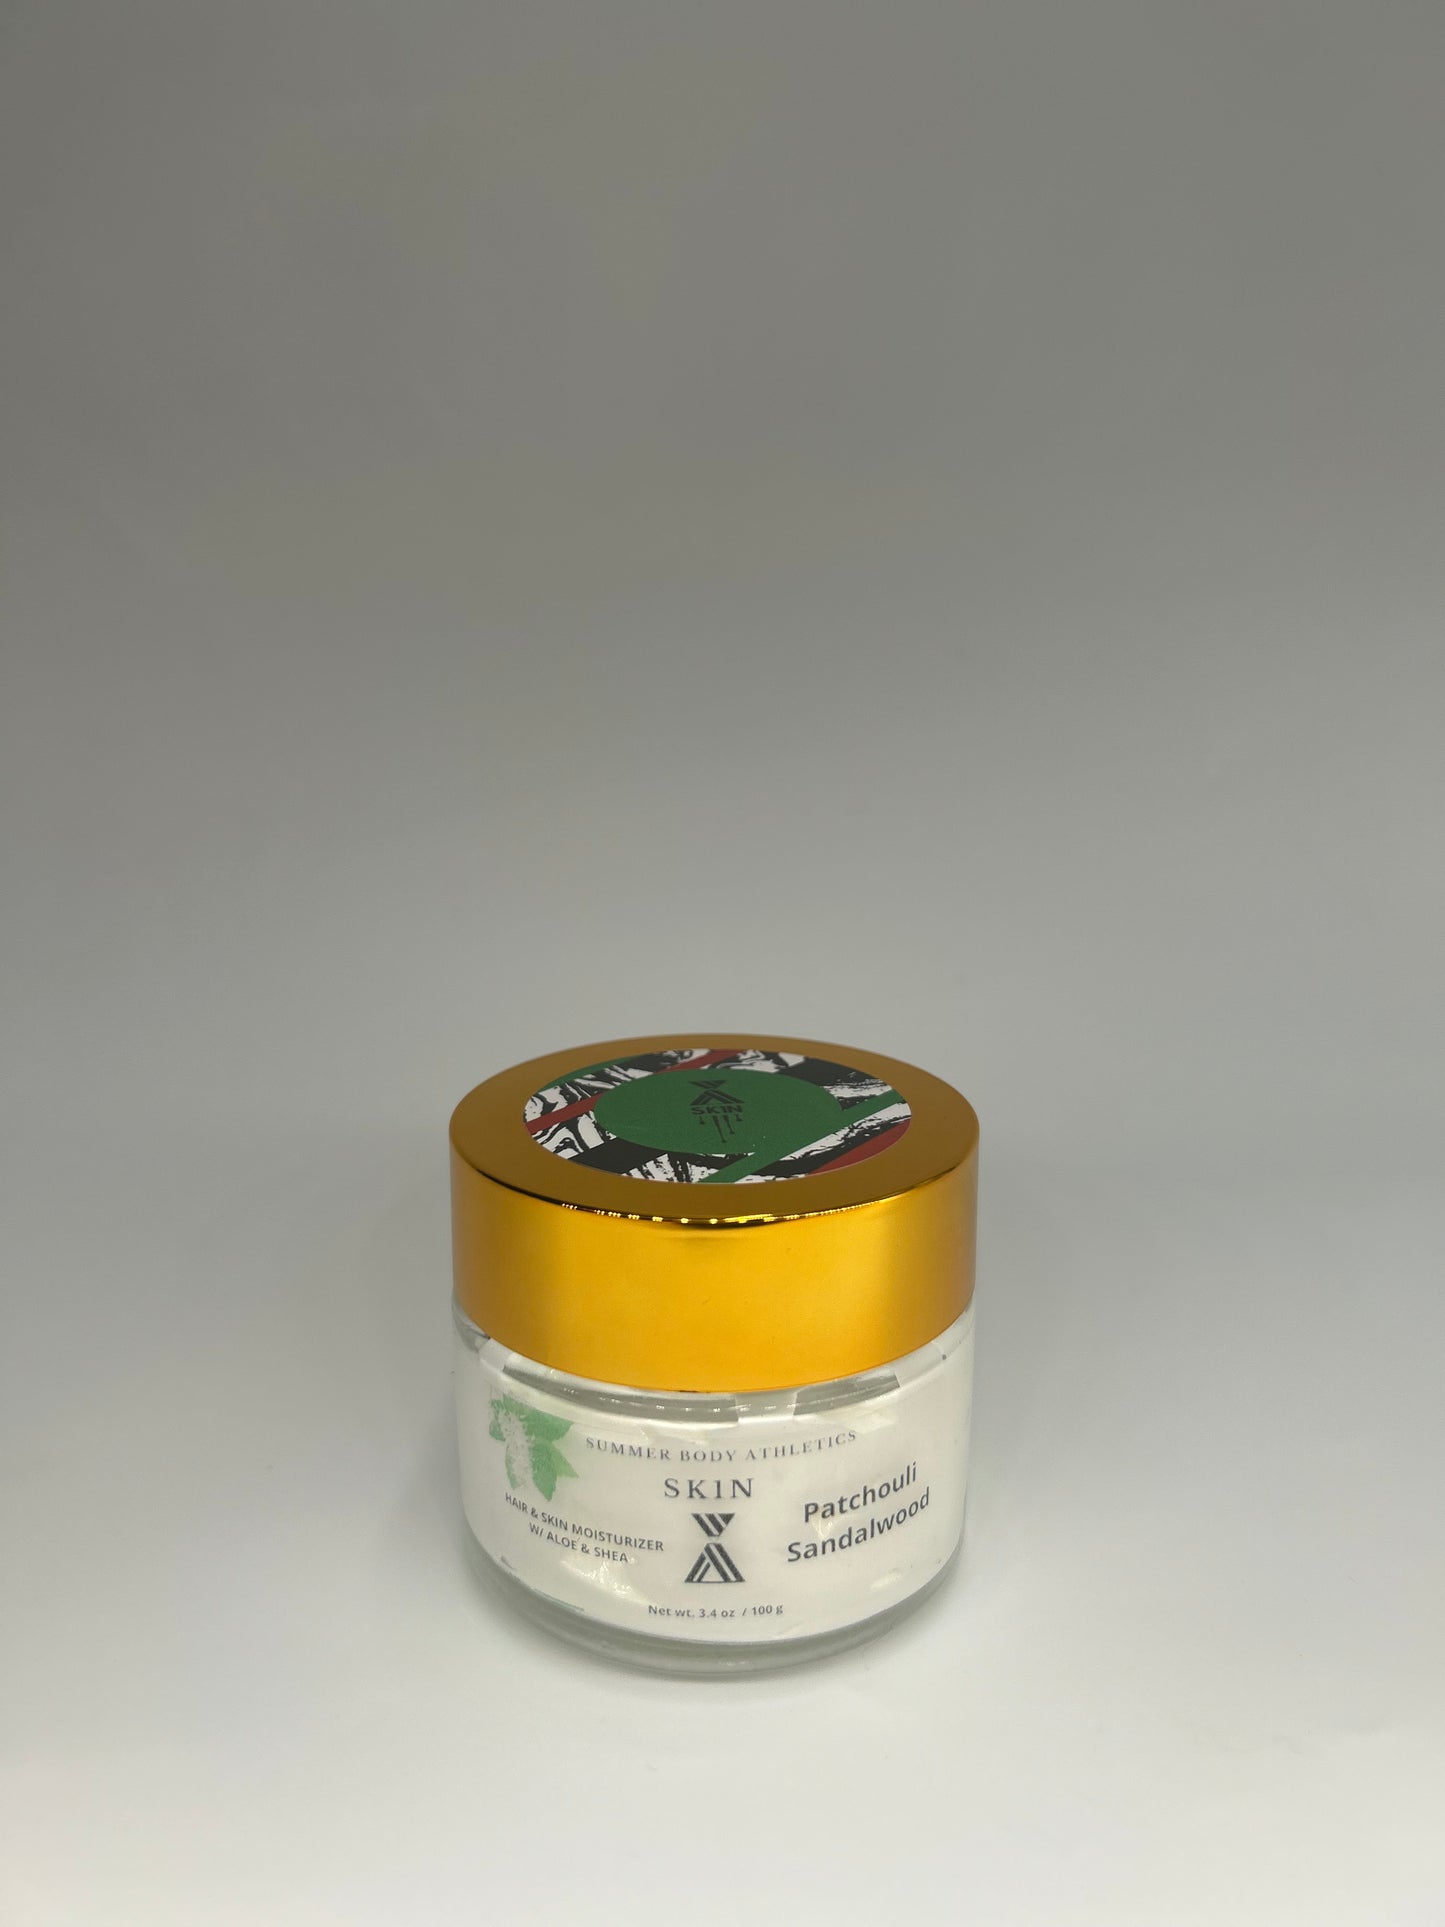 Patchouli + sandalwood moisture butter